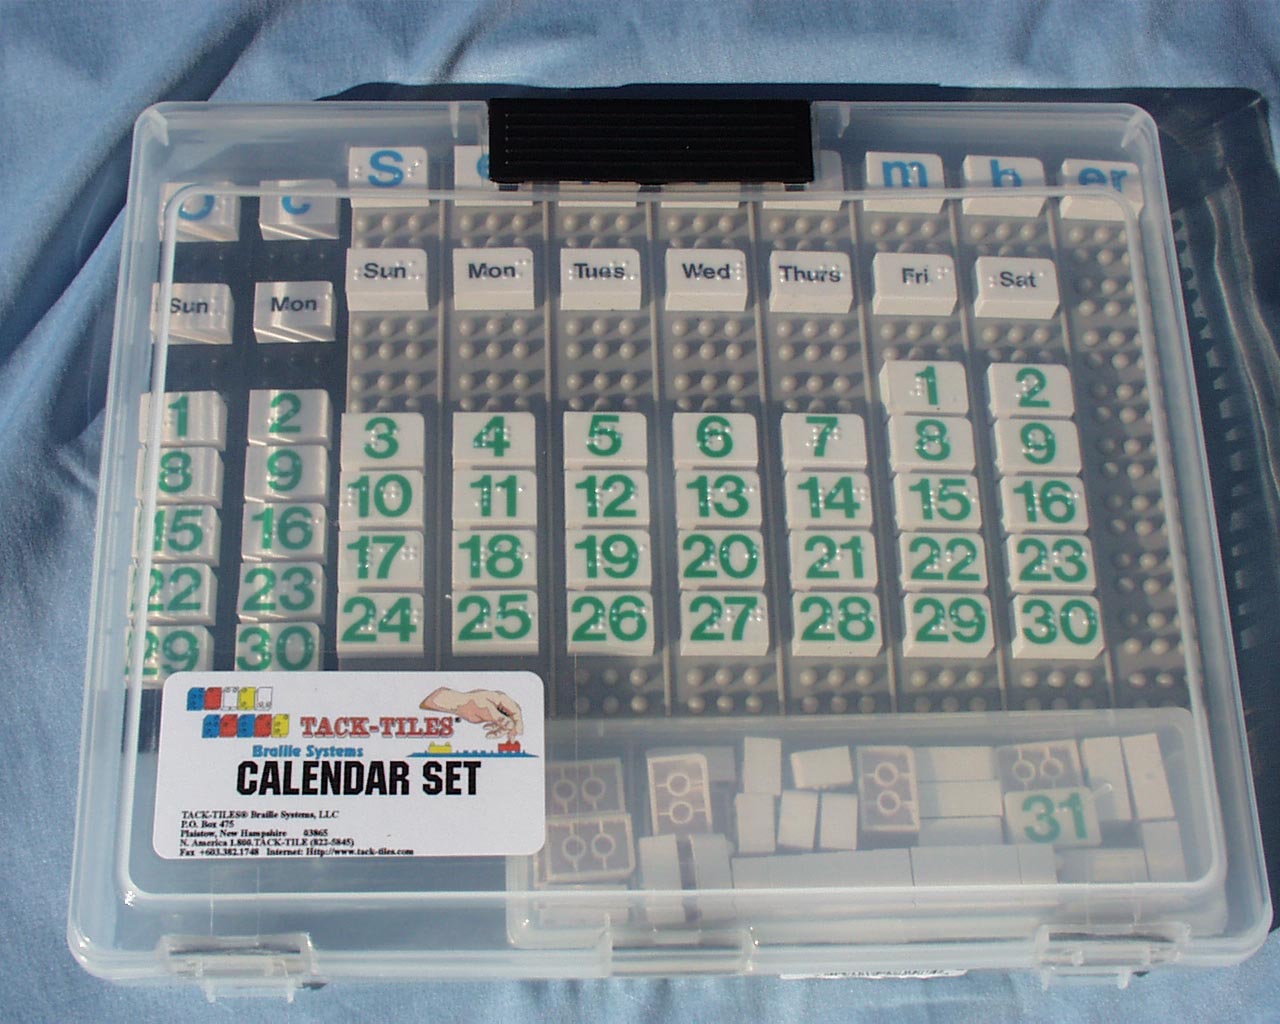 Boxed Calendar set